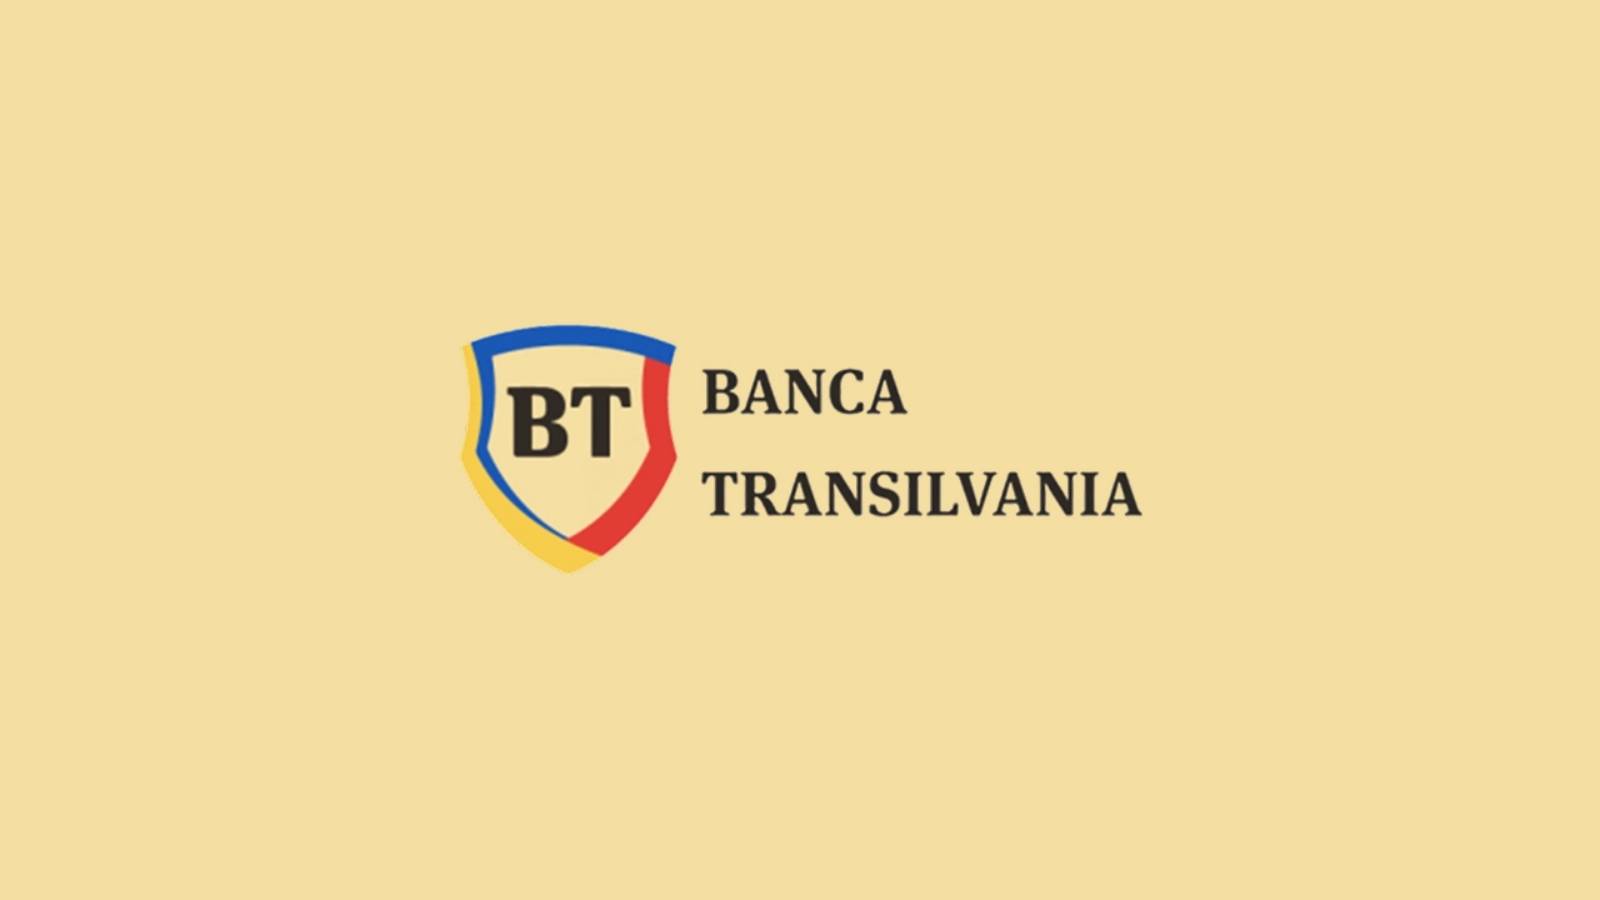 BANCA Transilvania Sorpresa Ufficiale LAST MINUTE GRATIS per i Clienti Rumeni